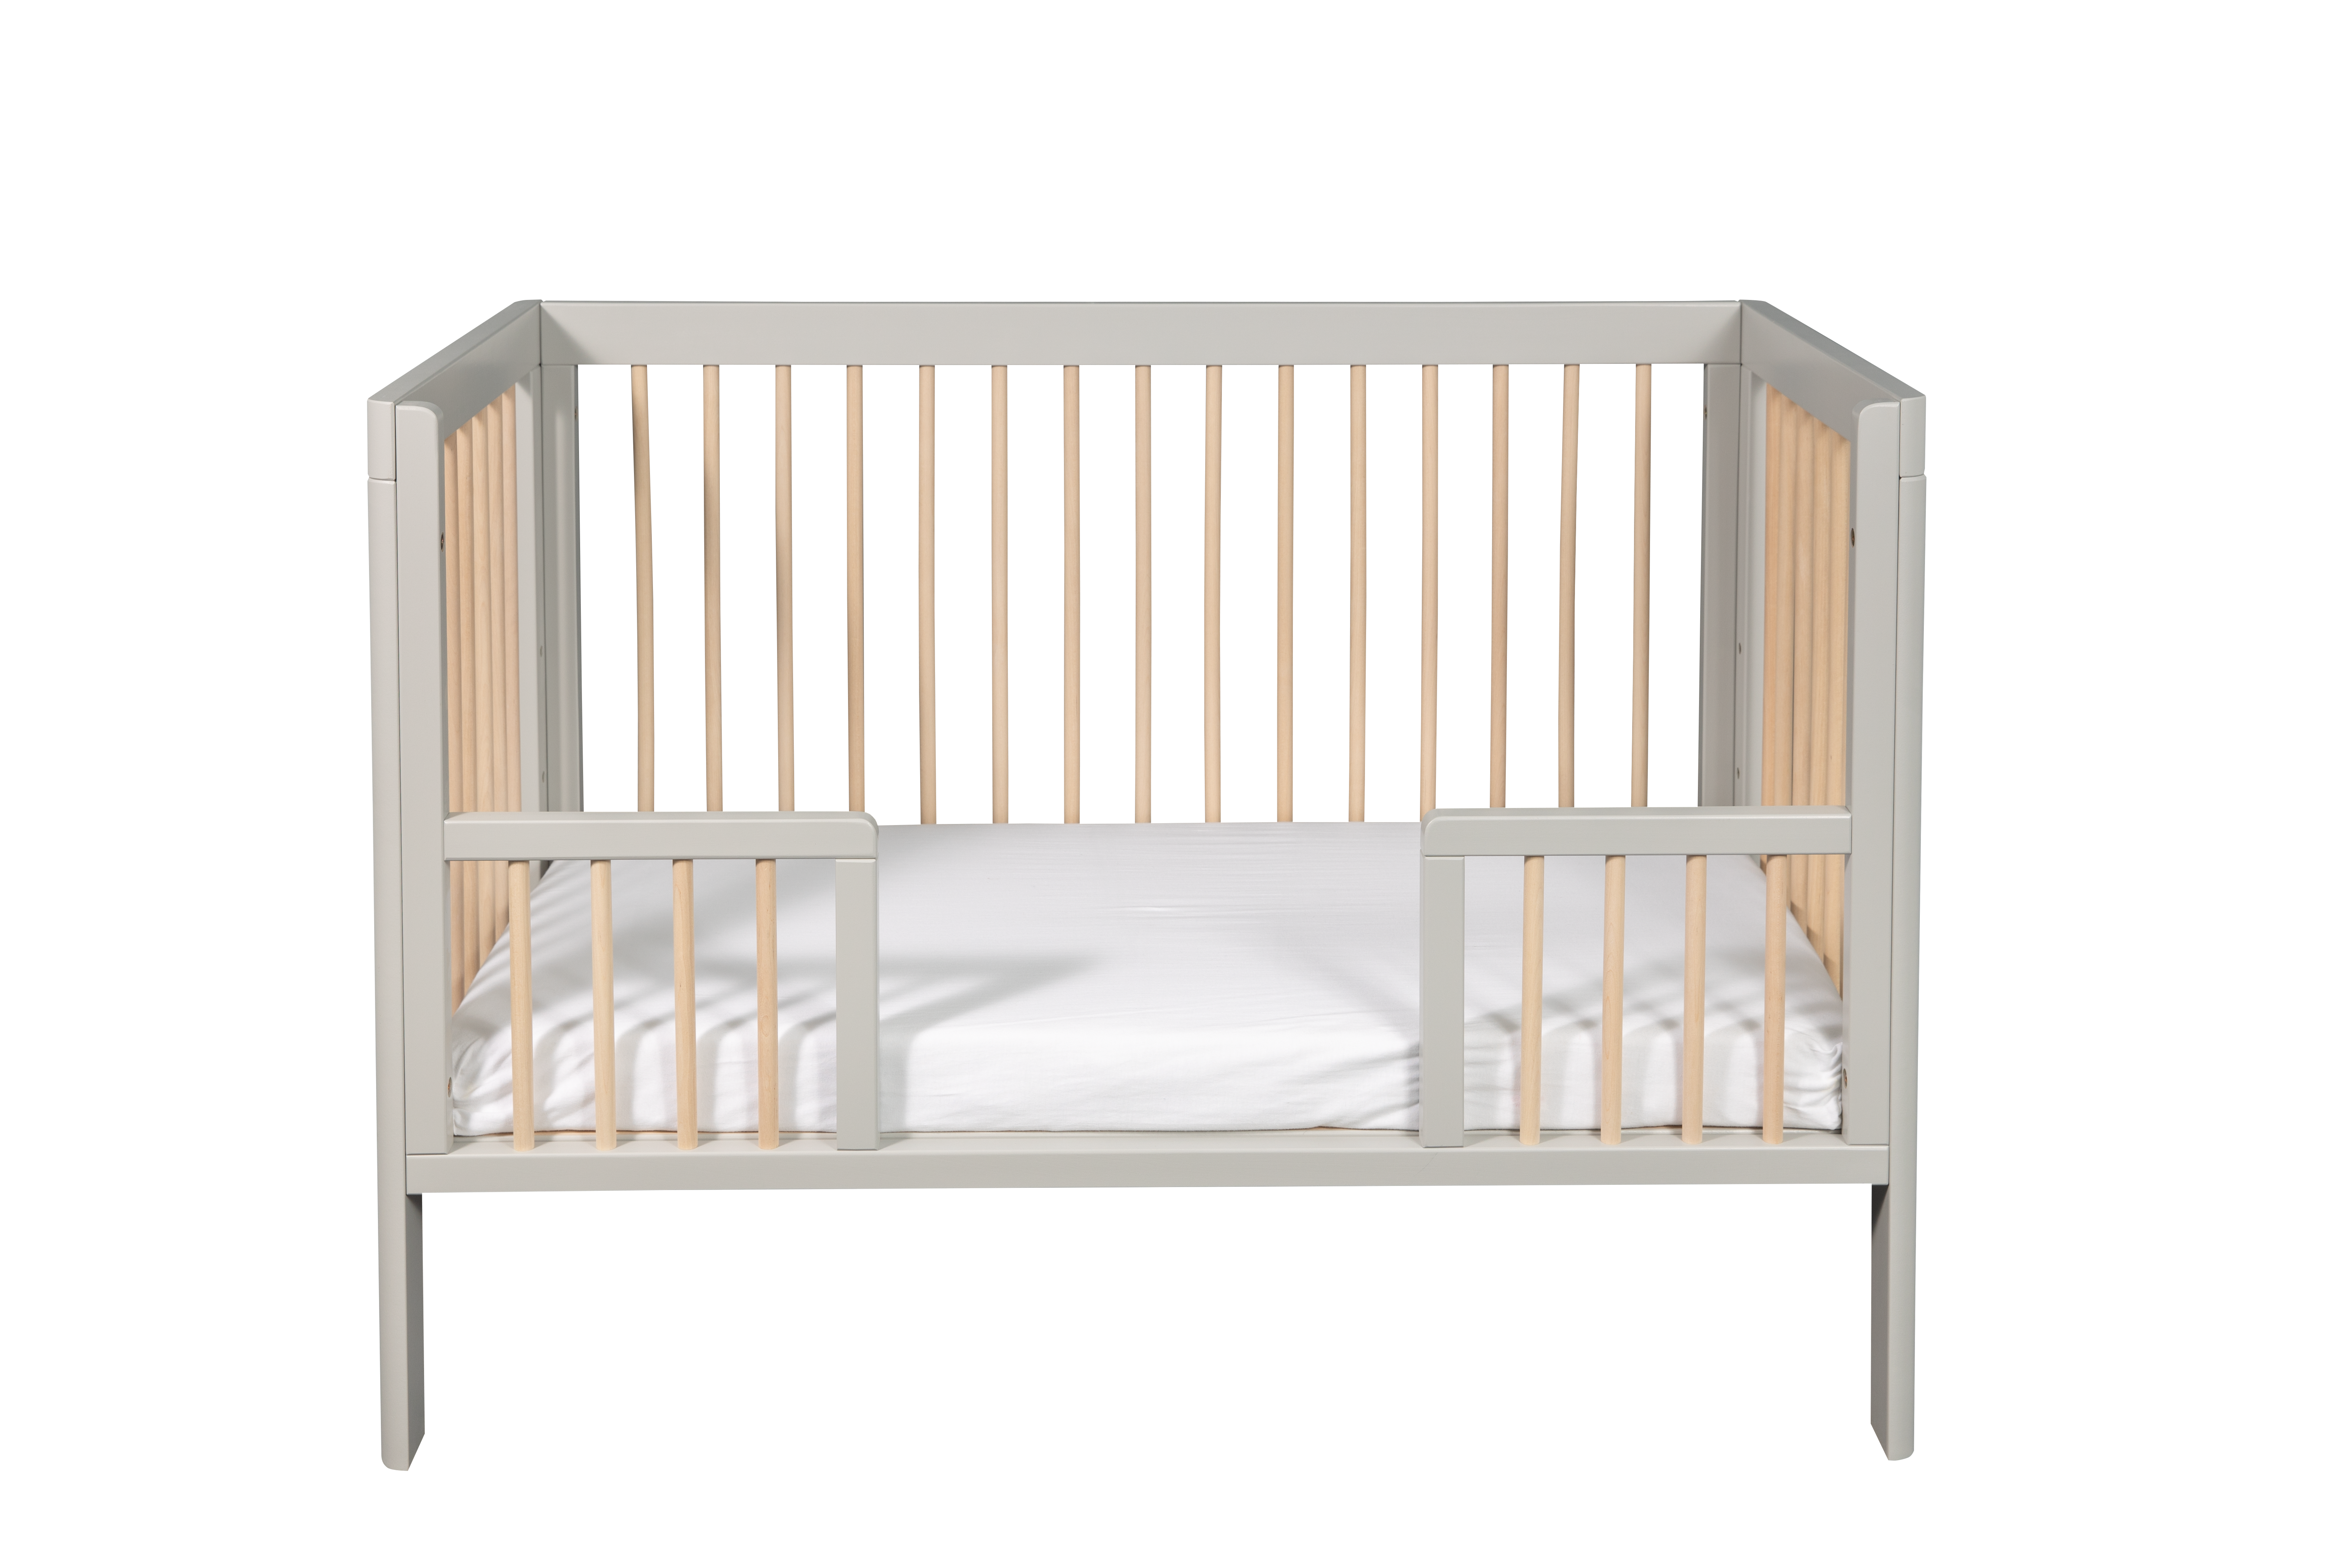 TROLL LUKAS gultiņas pusaudžu redele, divkrāsaina - soft grey/natural 